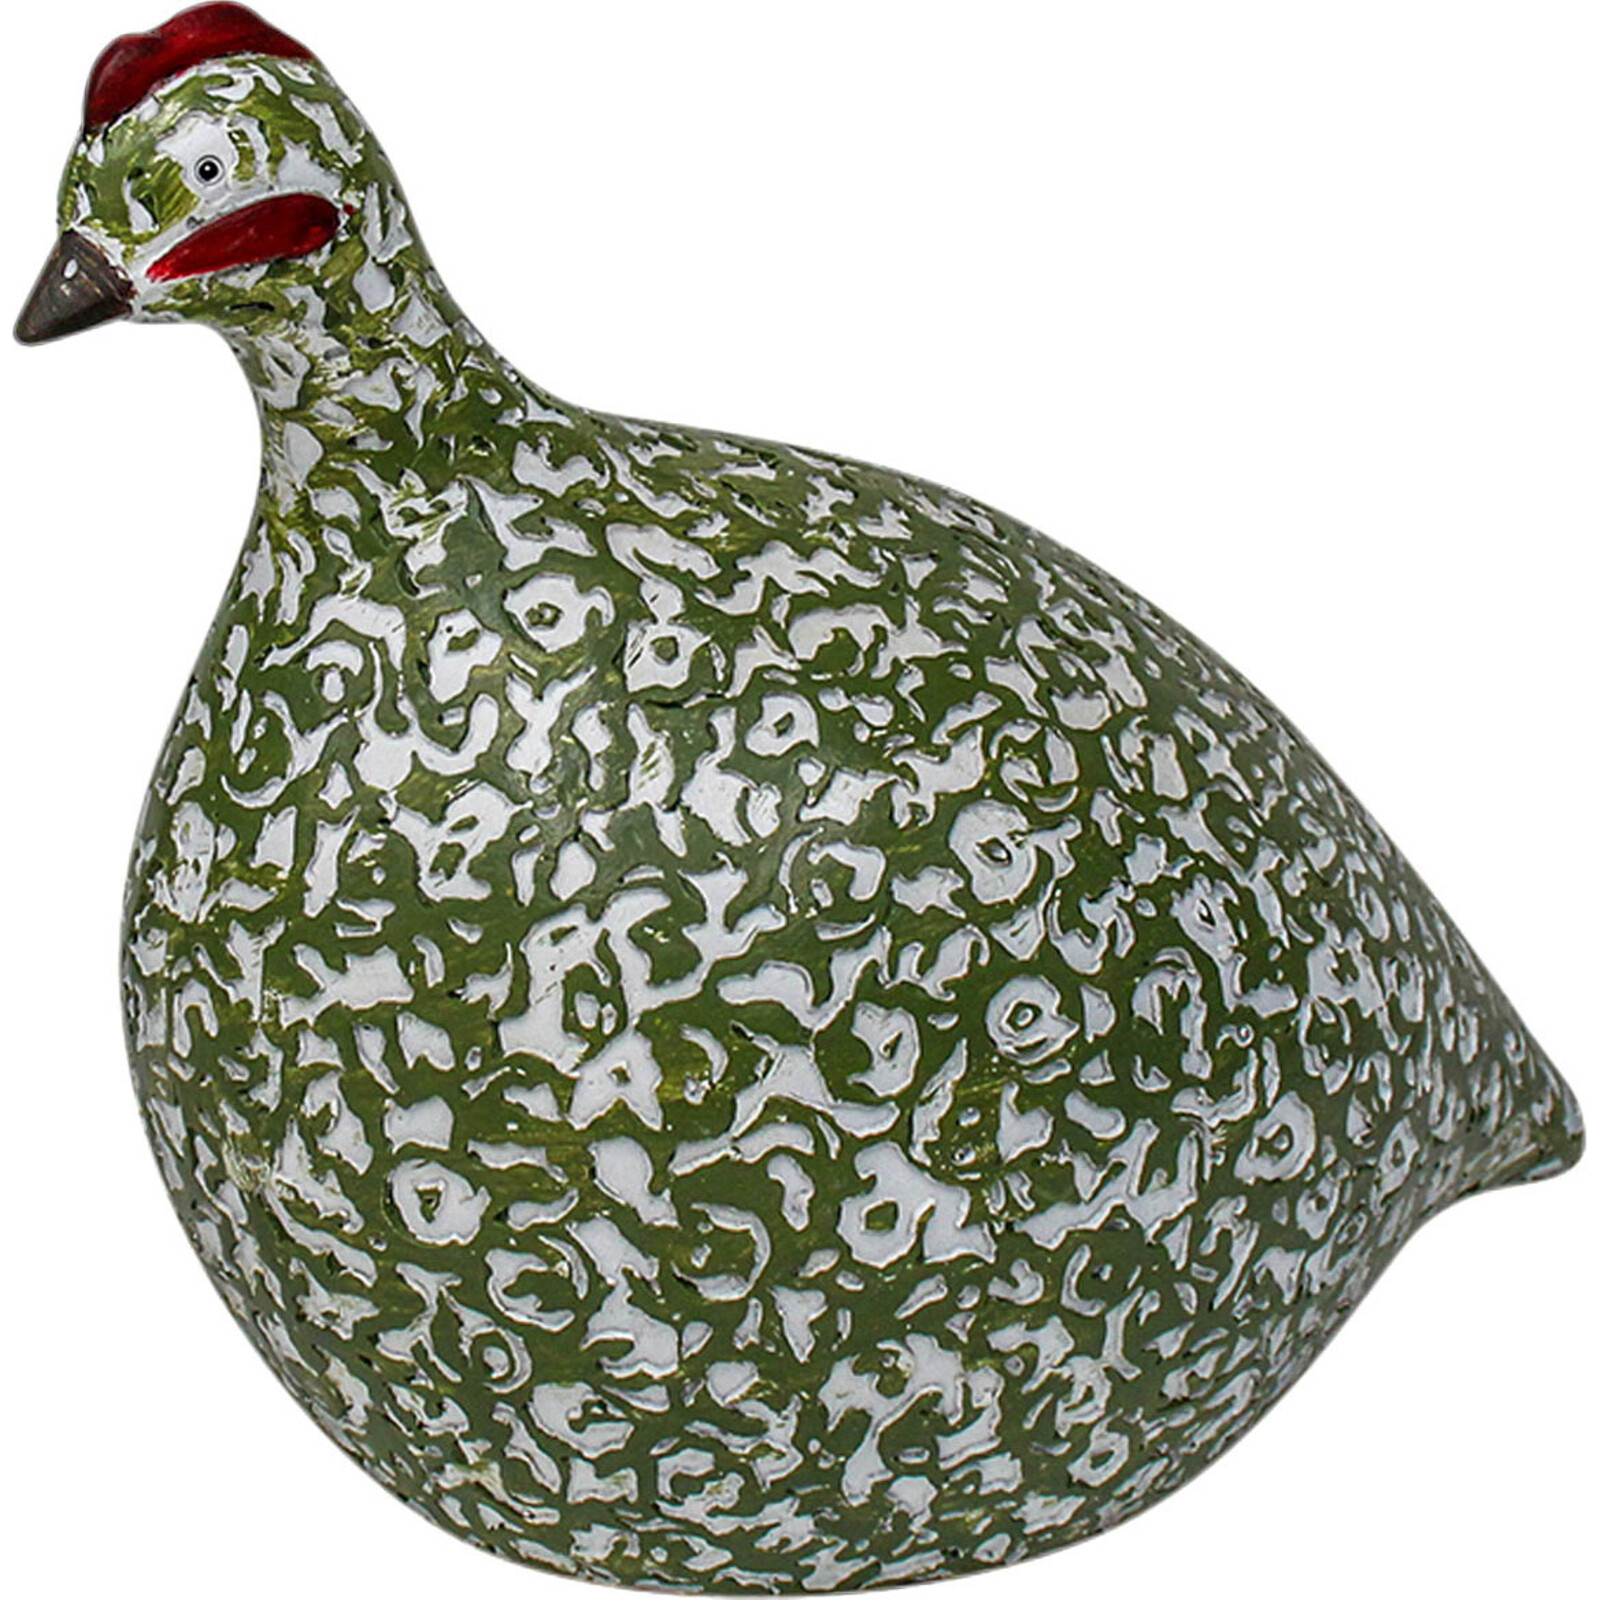 Guinea Fowl Sml Green